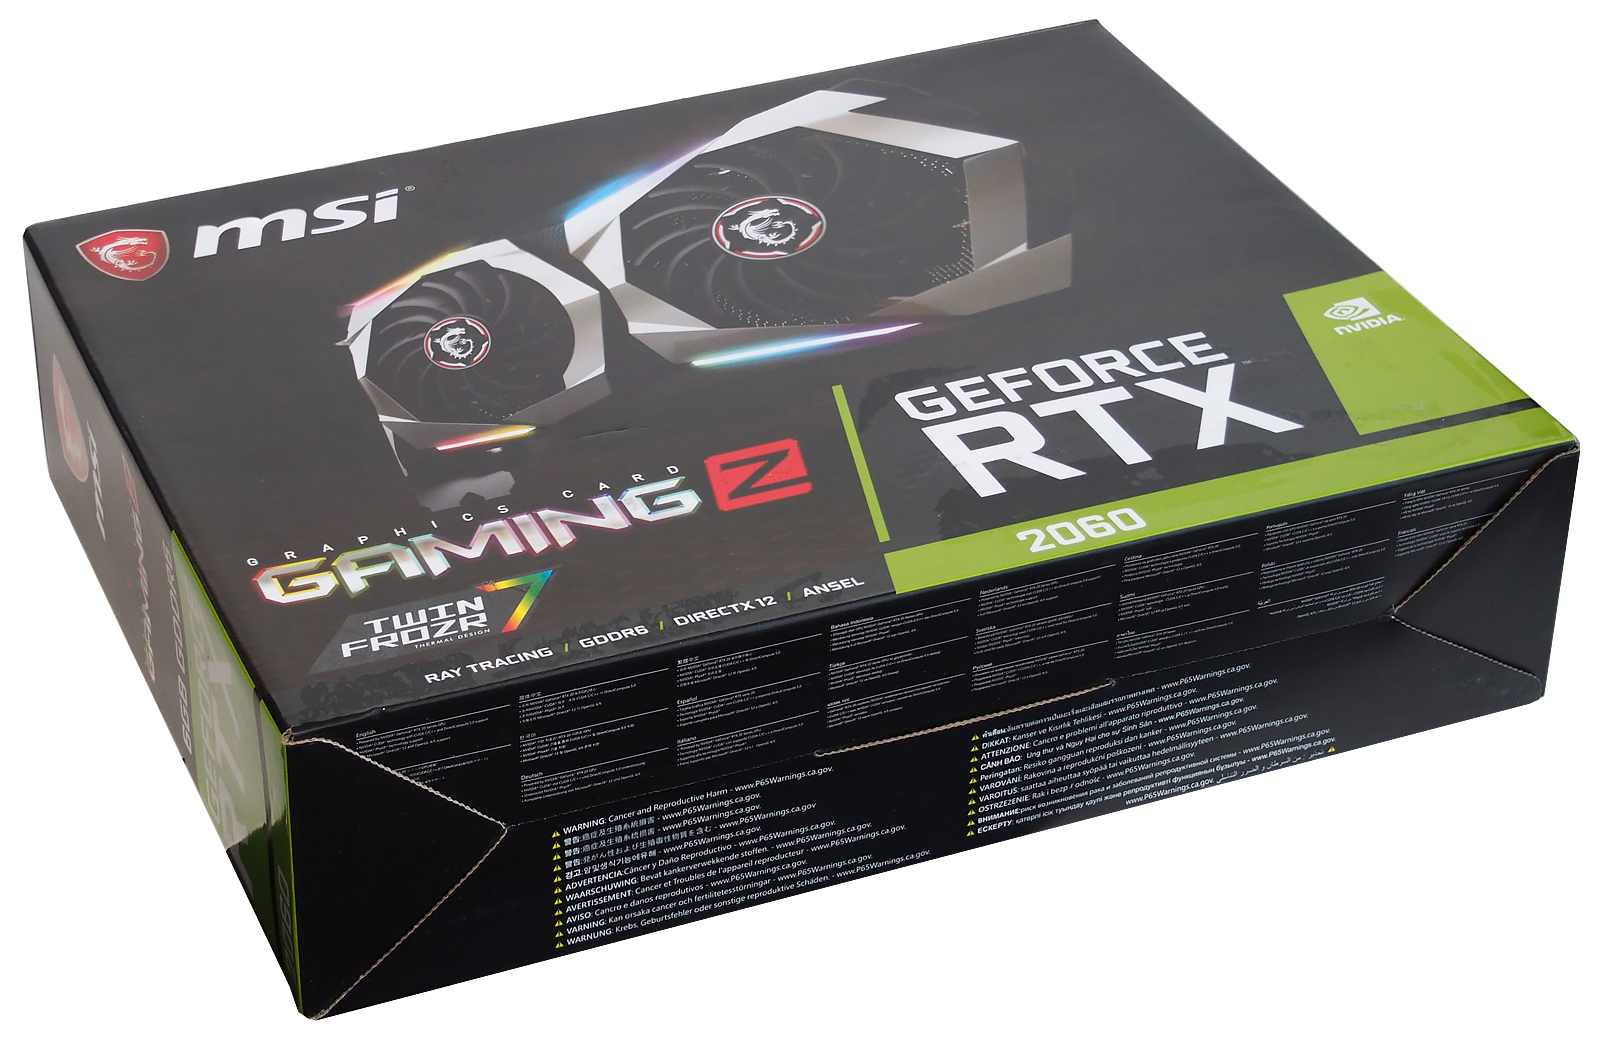 Rtx 2060 gaming pro. GEFORCE RTX 2060 Gaming z 6g. RTX 2060 MSI Gaming z. Коробка от MSI RTX 2060. Видеокарта РТХ 2060 МСИ упаковка.